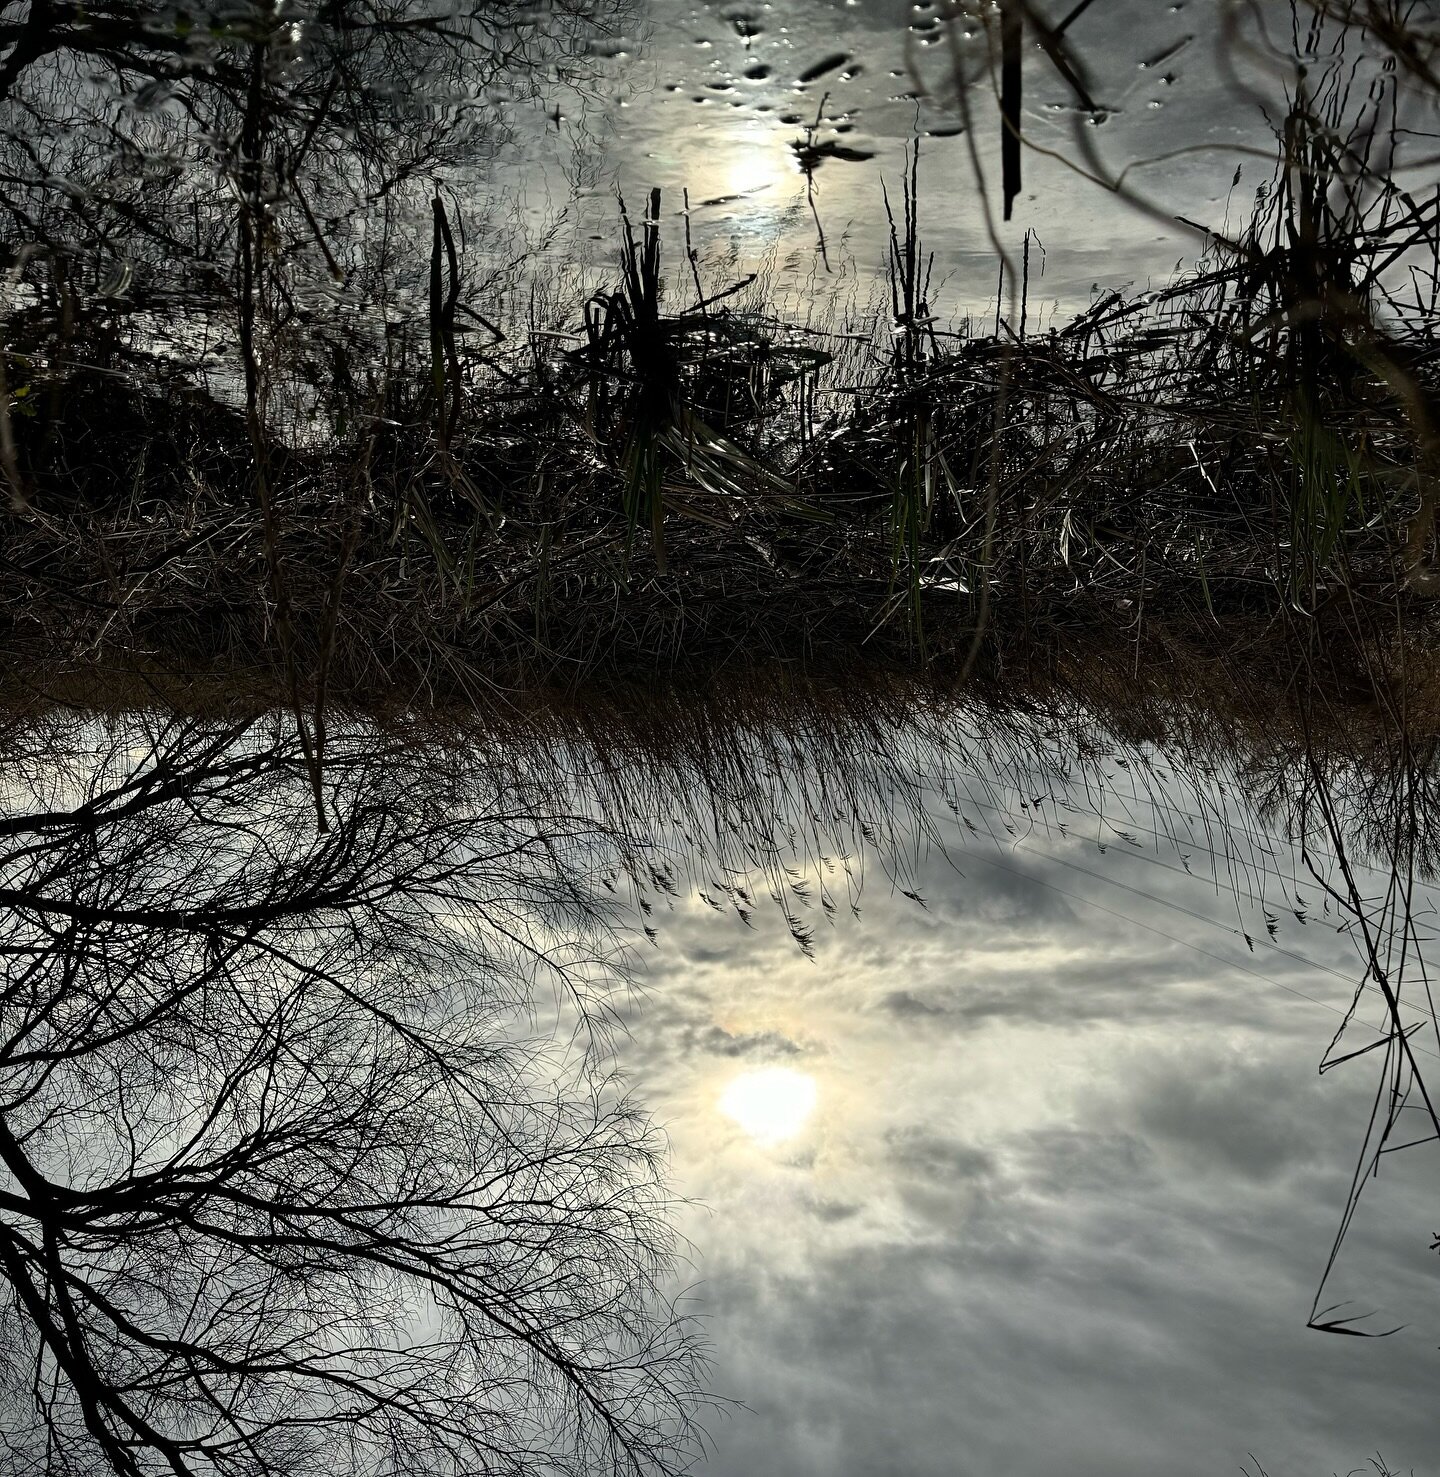 Reflections. #sundayrun #happyplace #reflections #trailrunning #chertseymeads #naturephotography